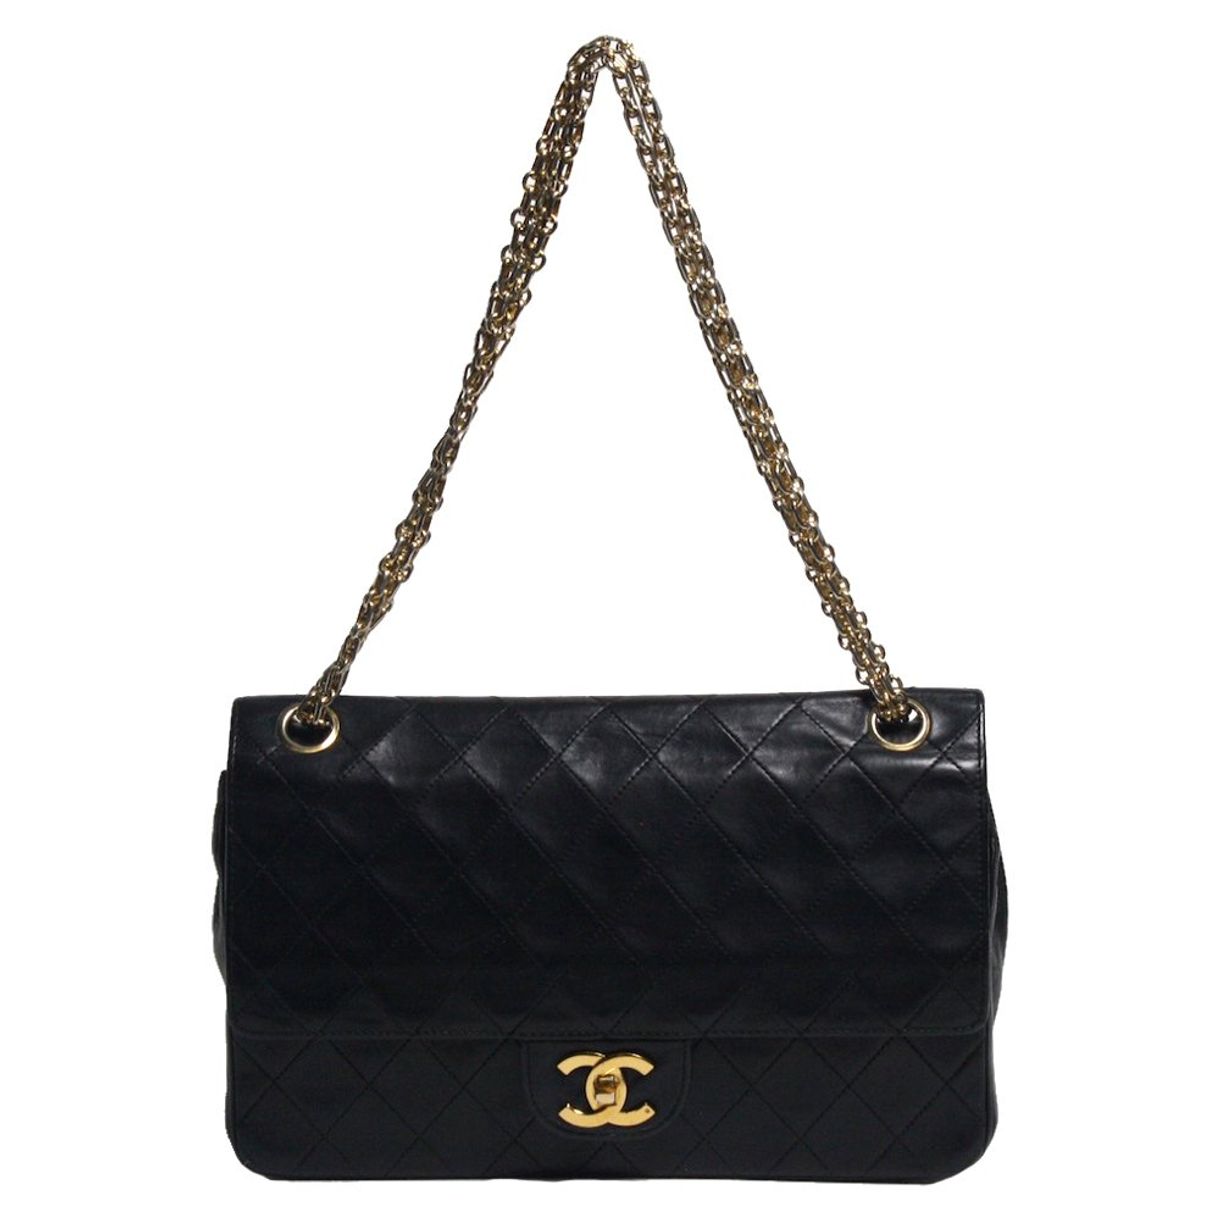 Bolsa-Chanel-Vintage-Flap-Bag